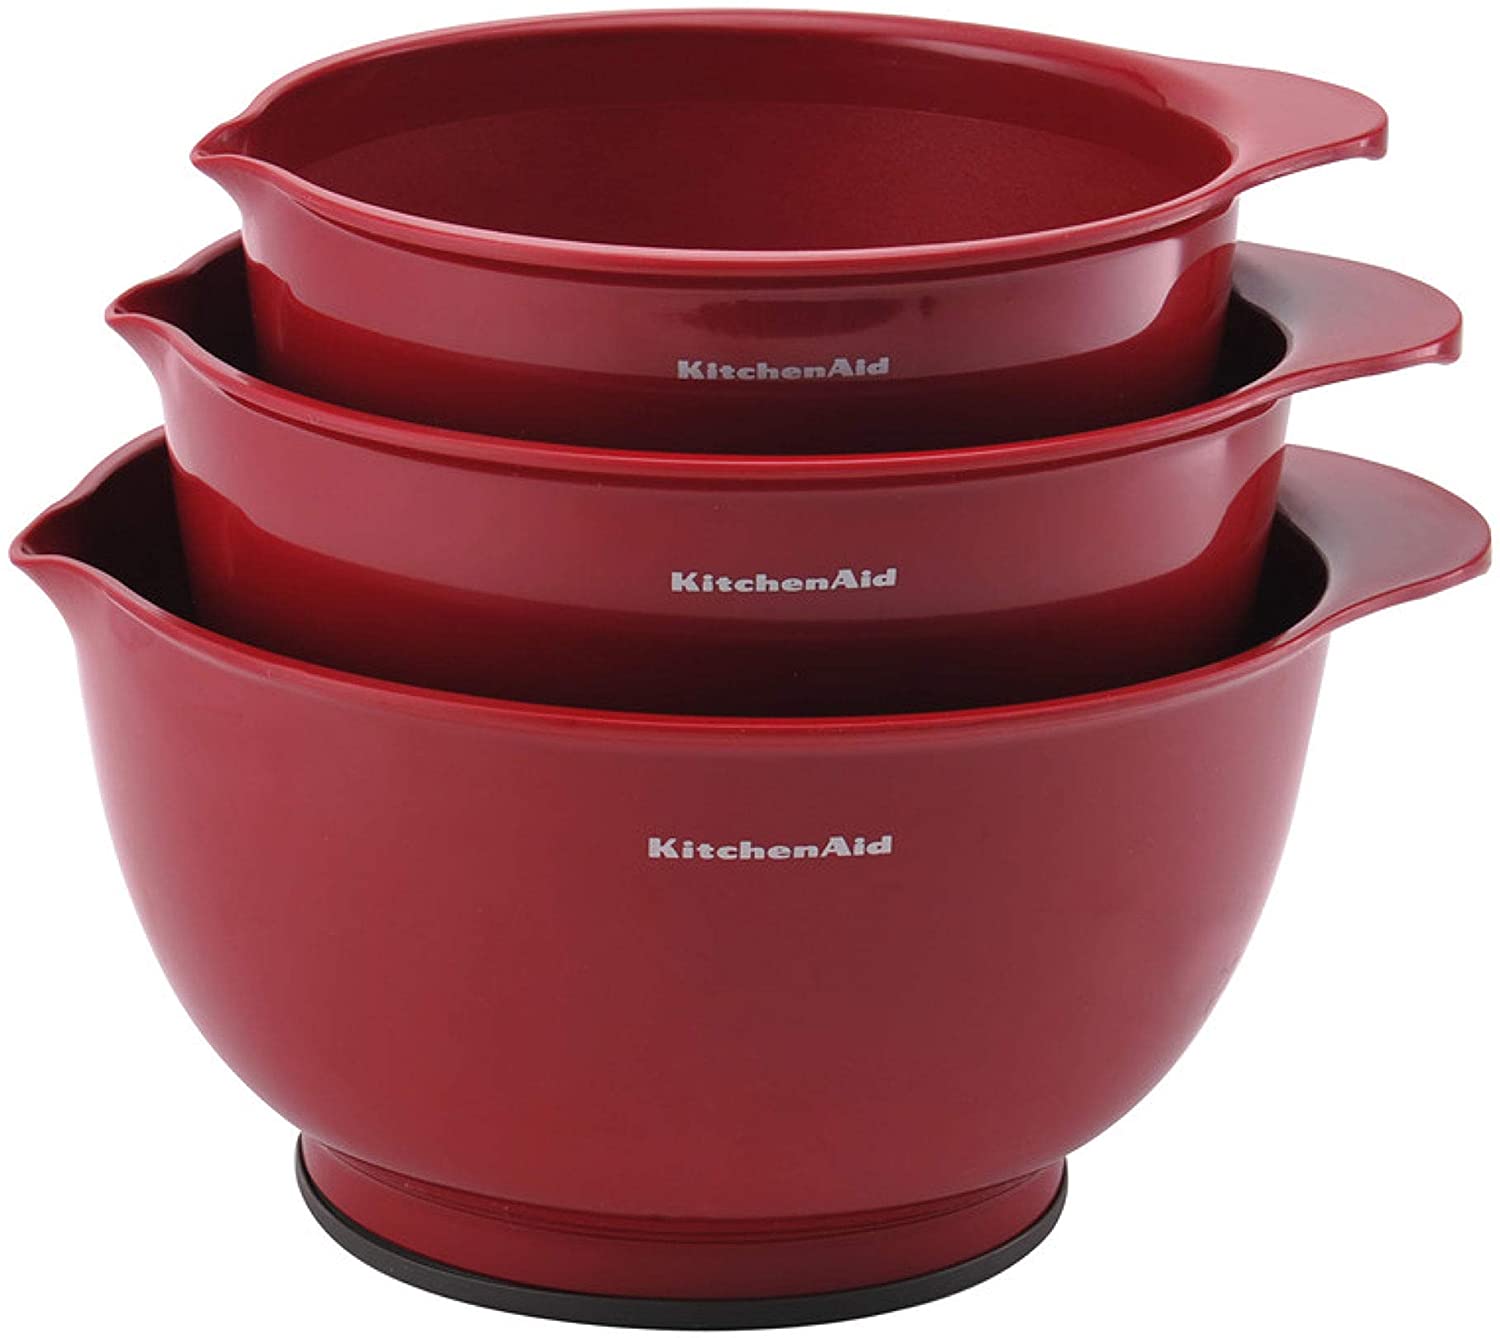 KitchenAid Classic KC175OSERA Non-Slip Base Mixing Bowl Set, 3-Piece